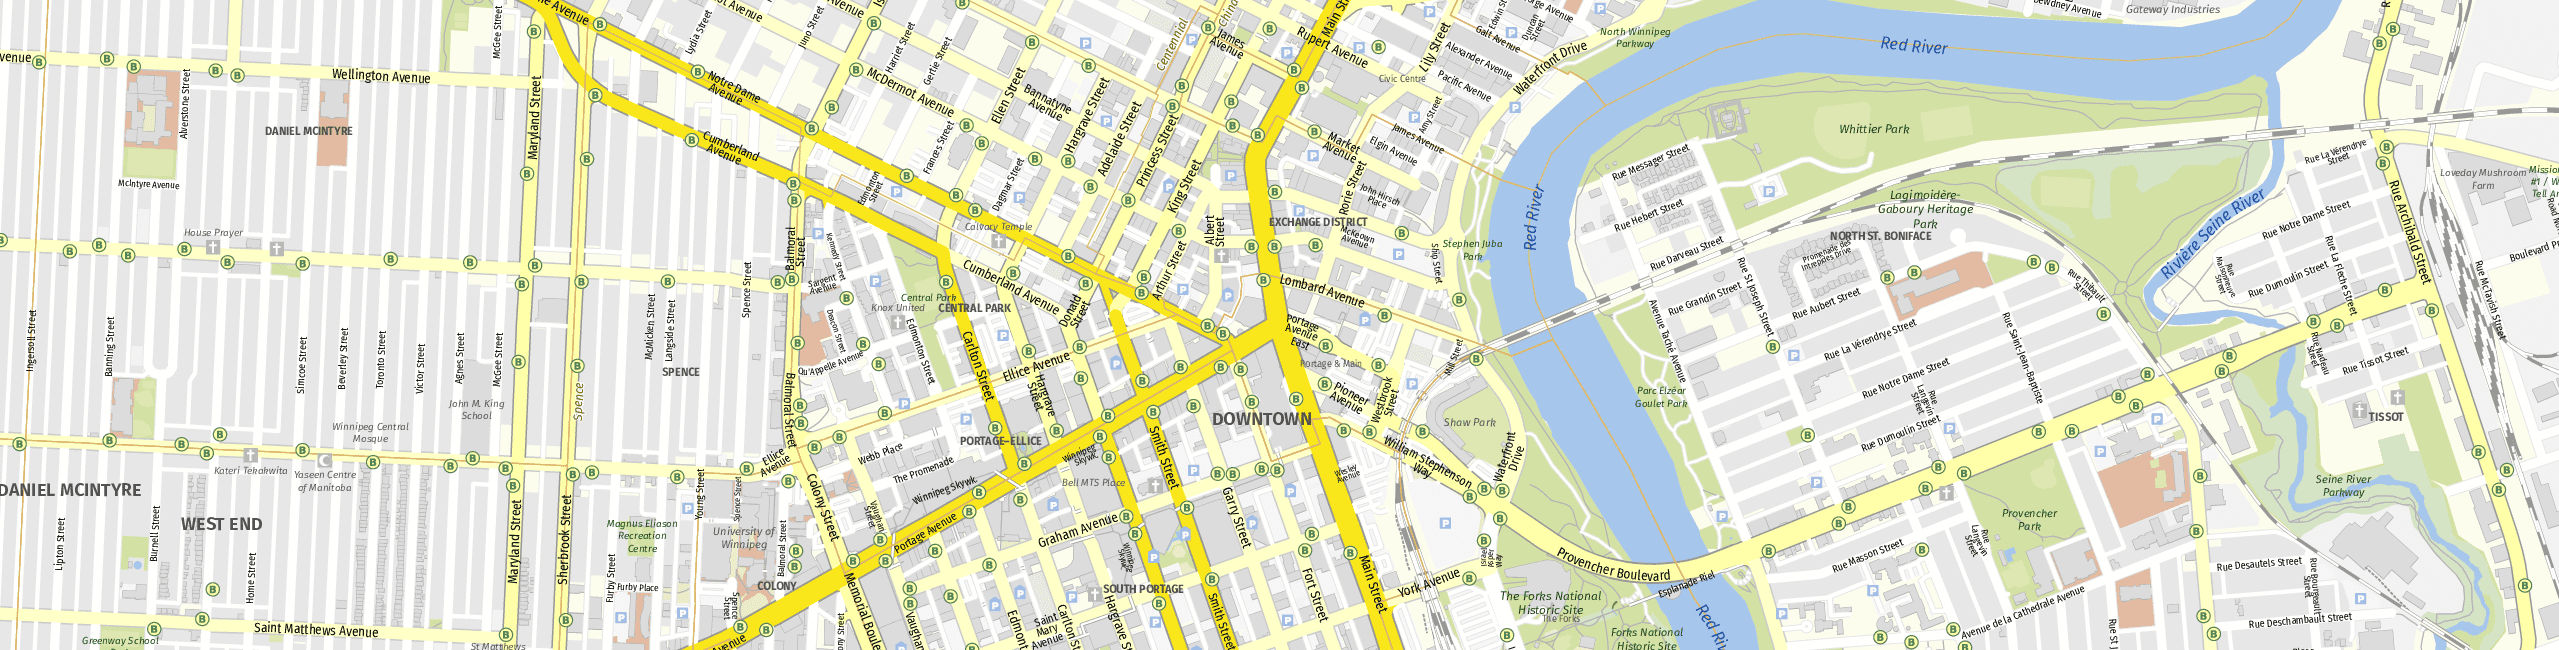 Stadtplan Winnipeg zum Downloaden.